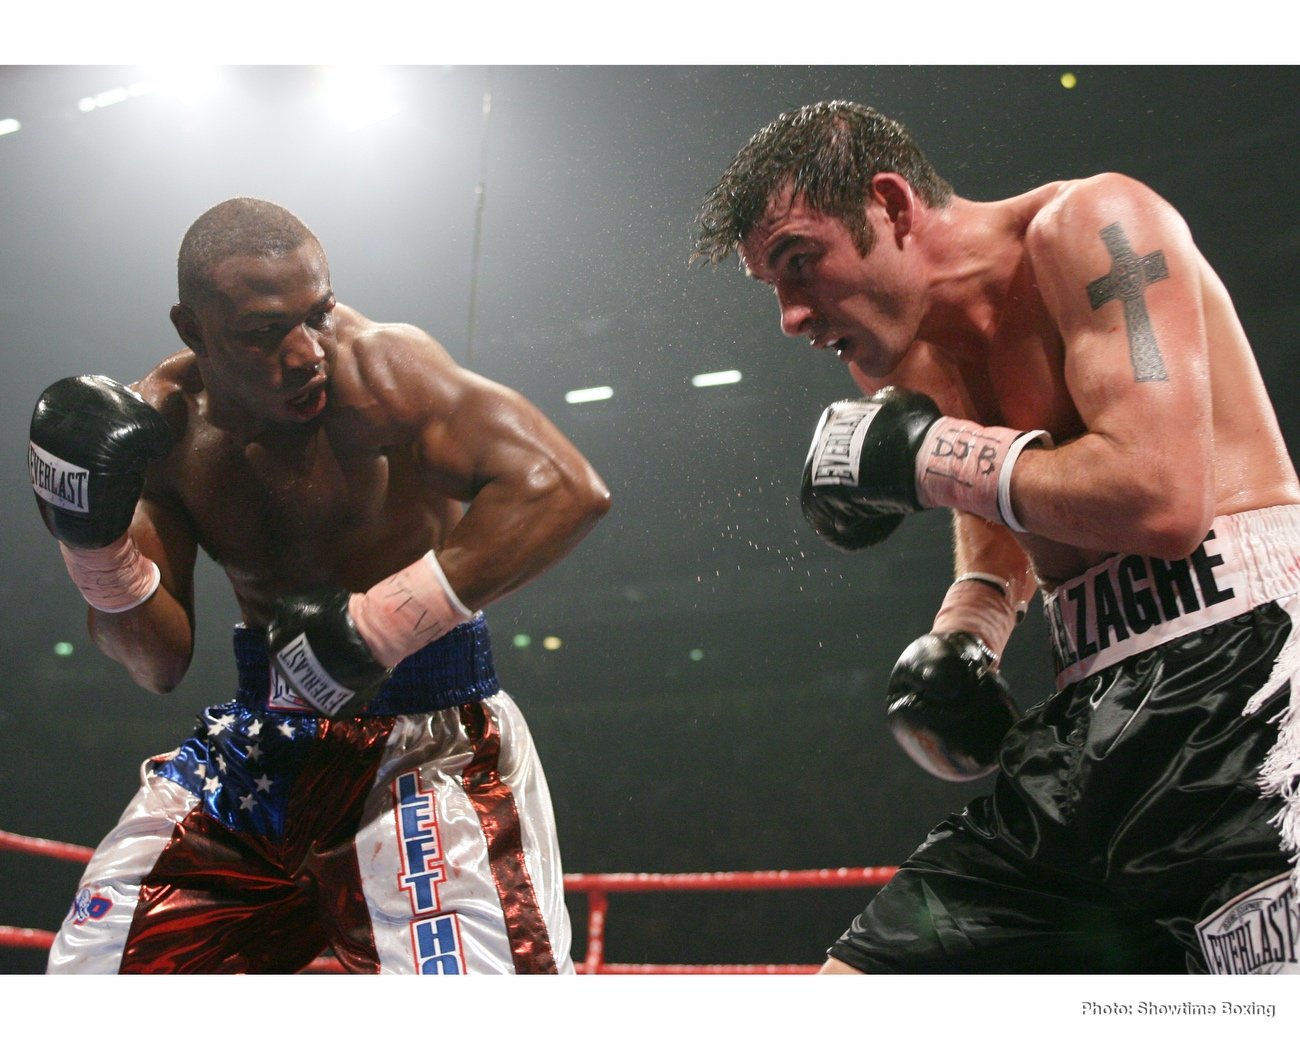 Joe Calzaghe boxing image / photo